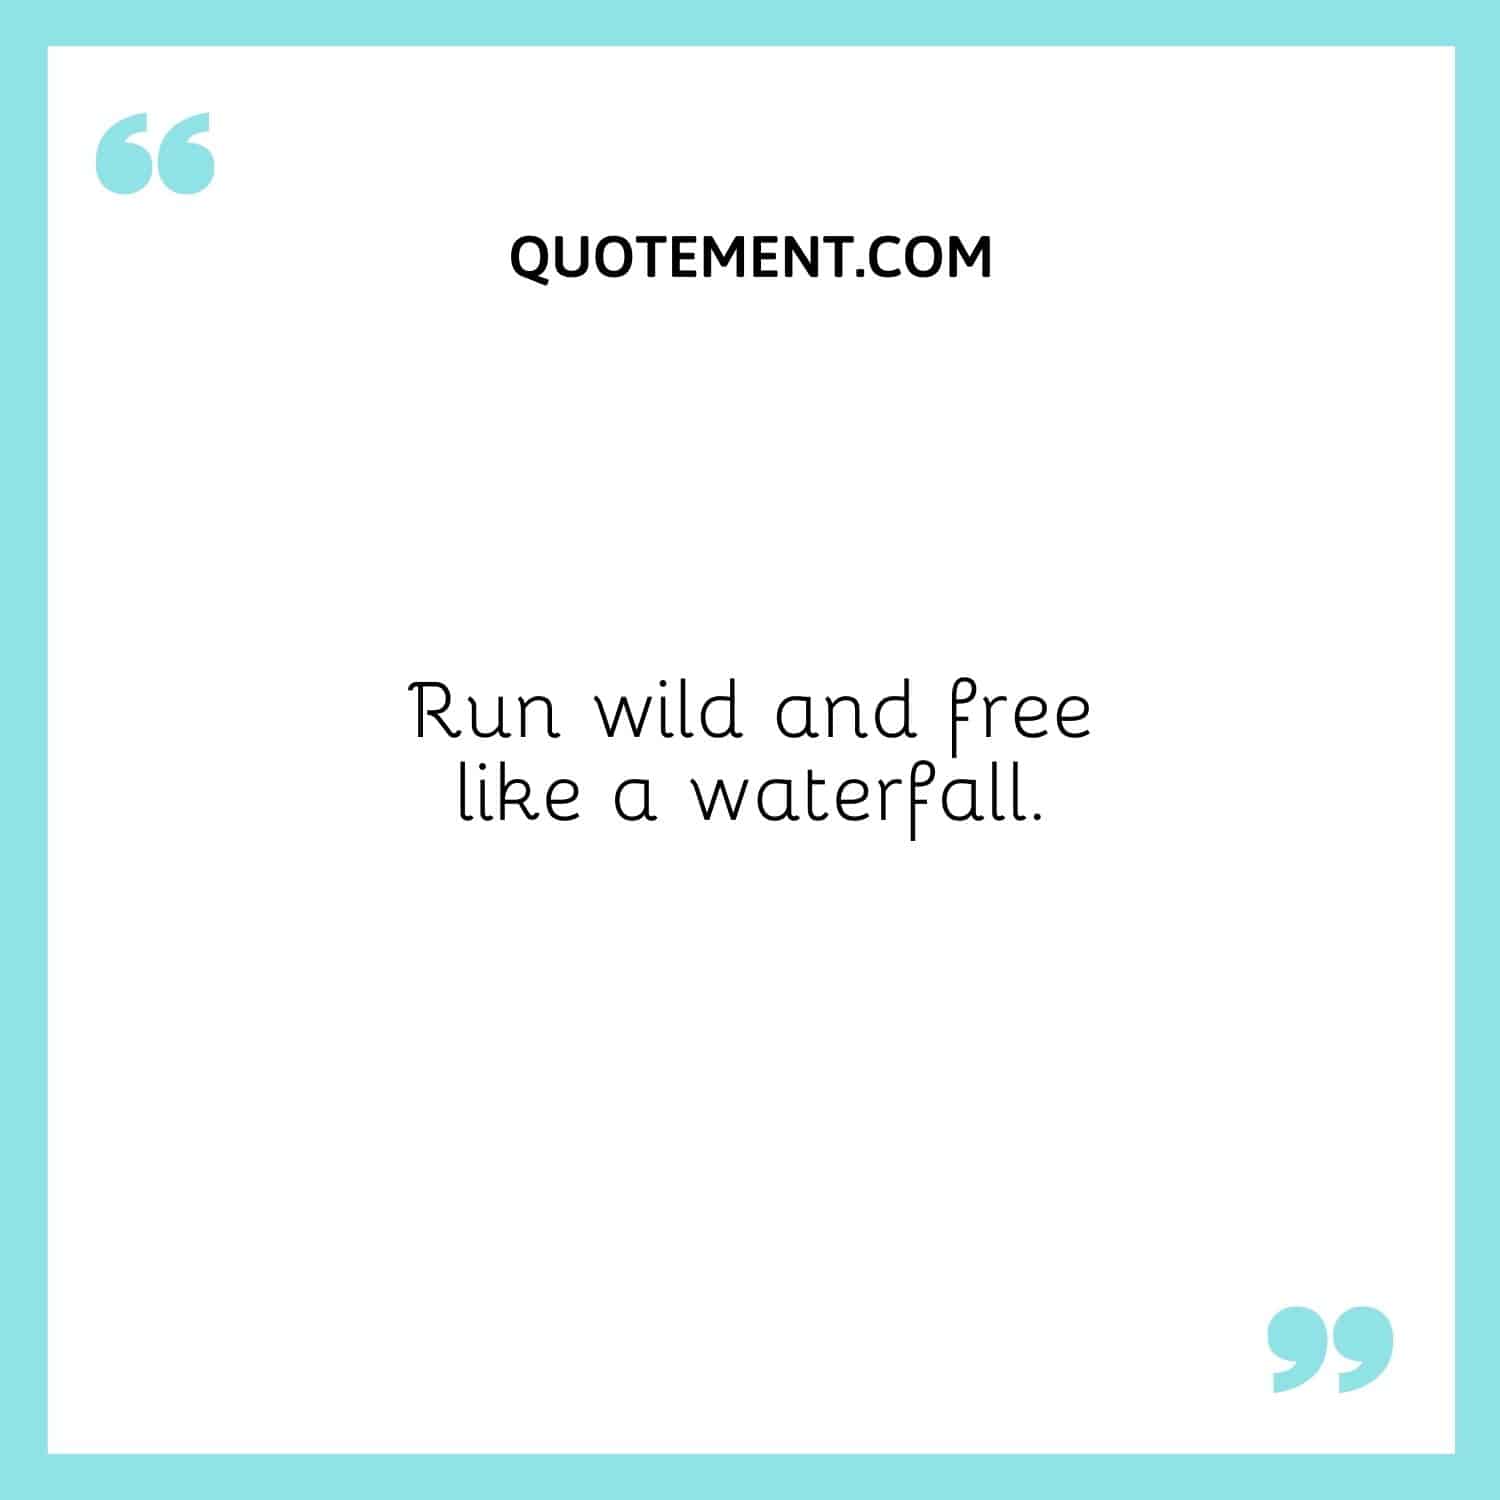 Run wild and free like a waterfall.